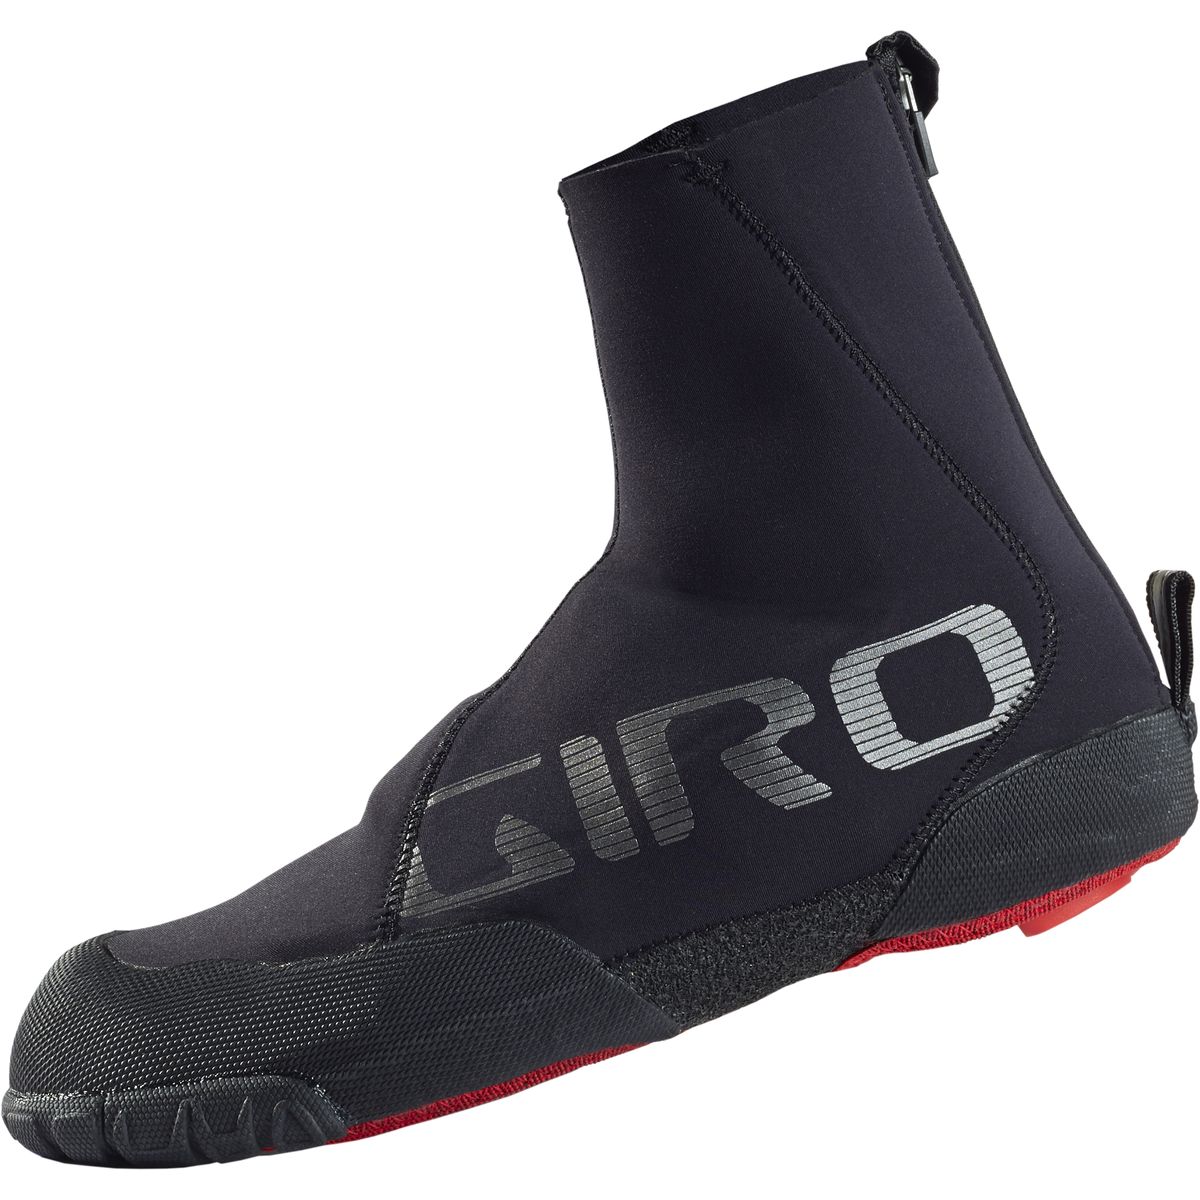 Giro Proof MTB Winter Shoe Covers